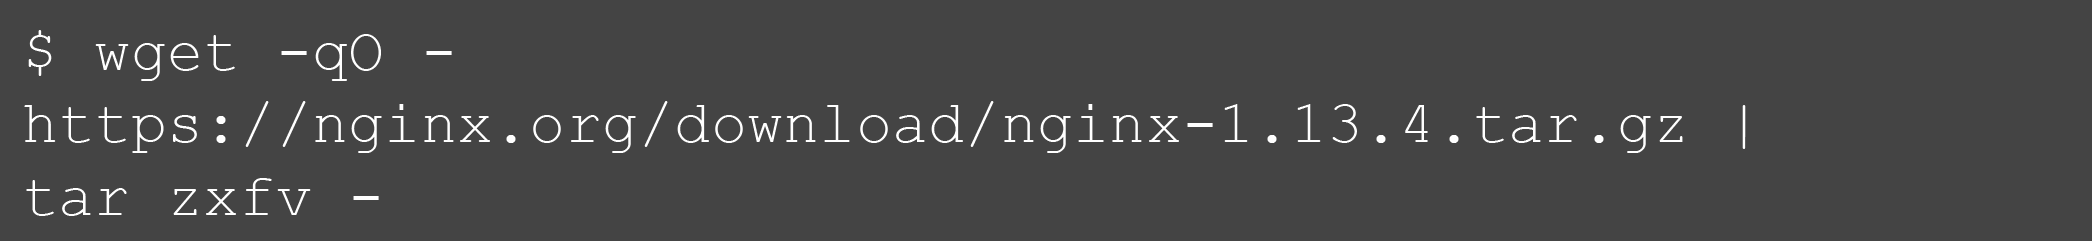 Open Source NGINX